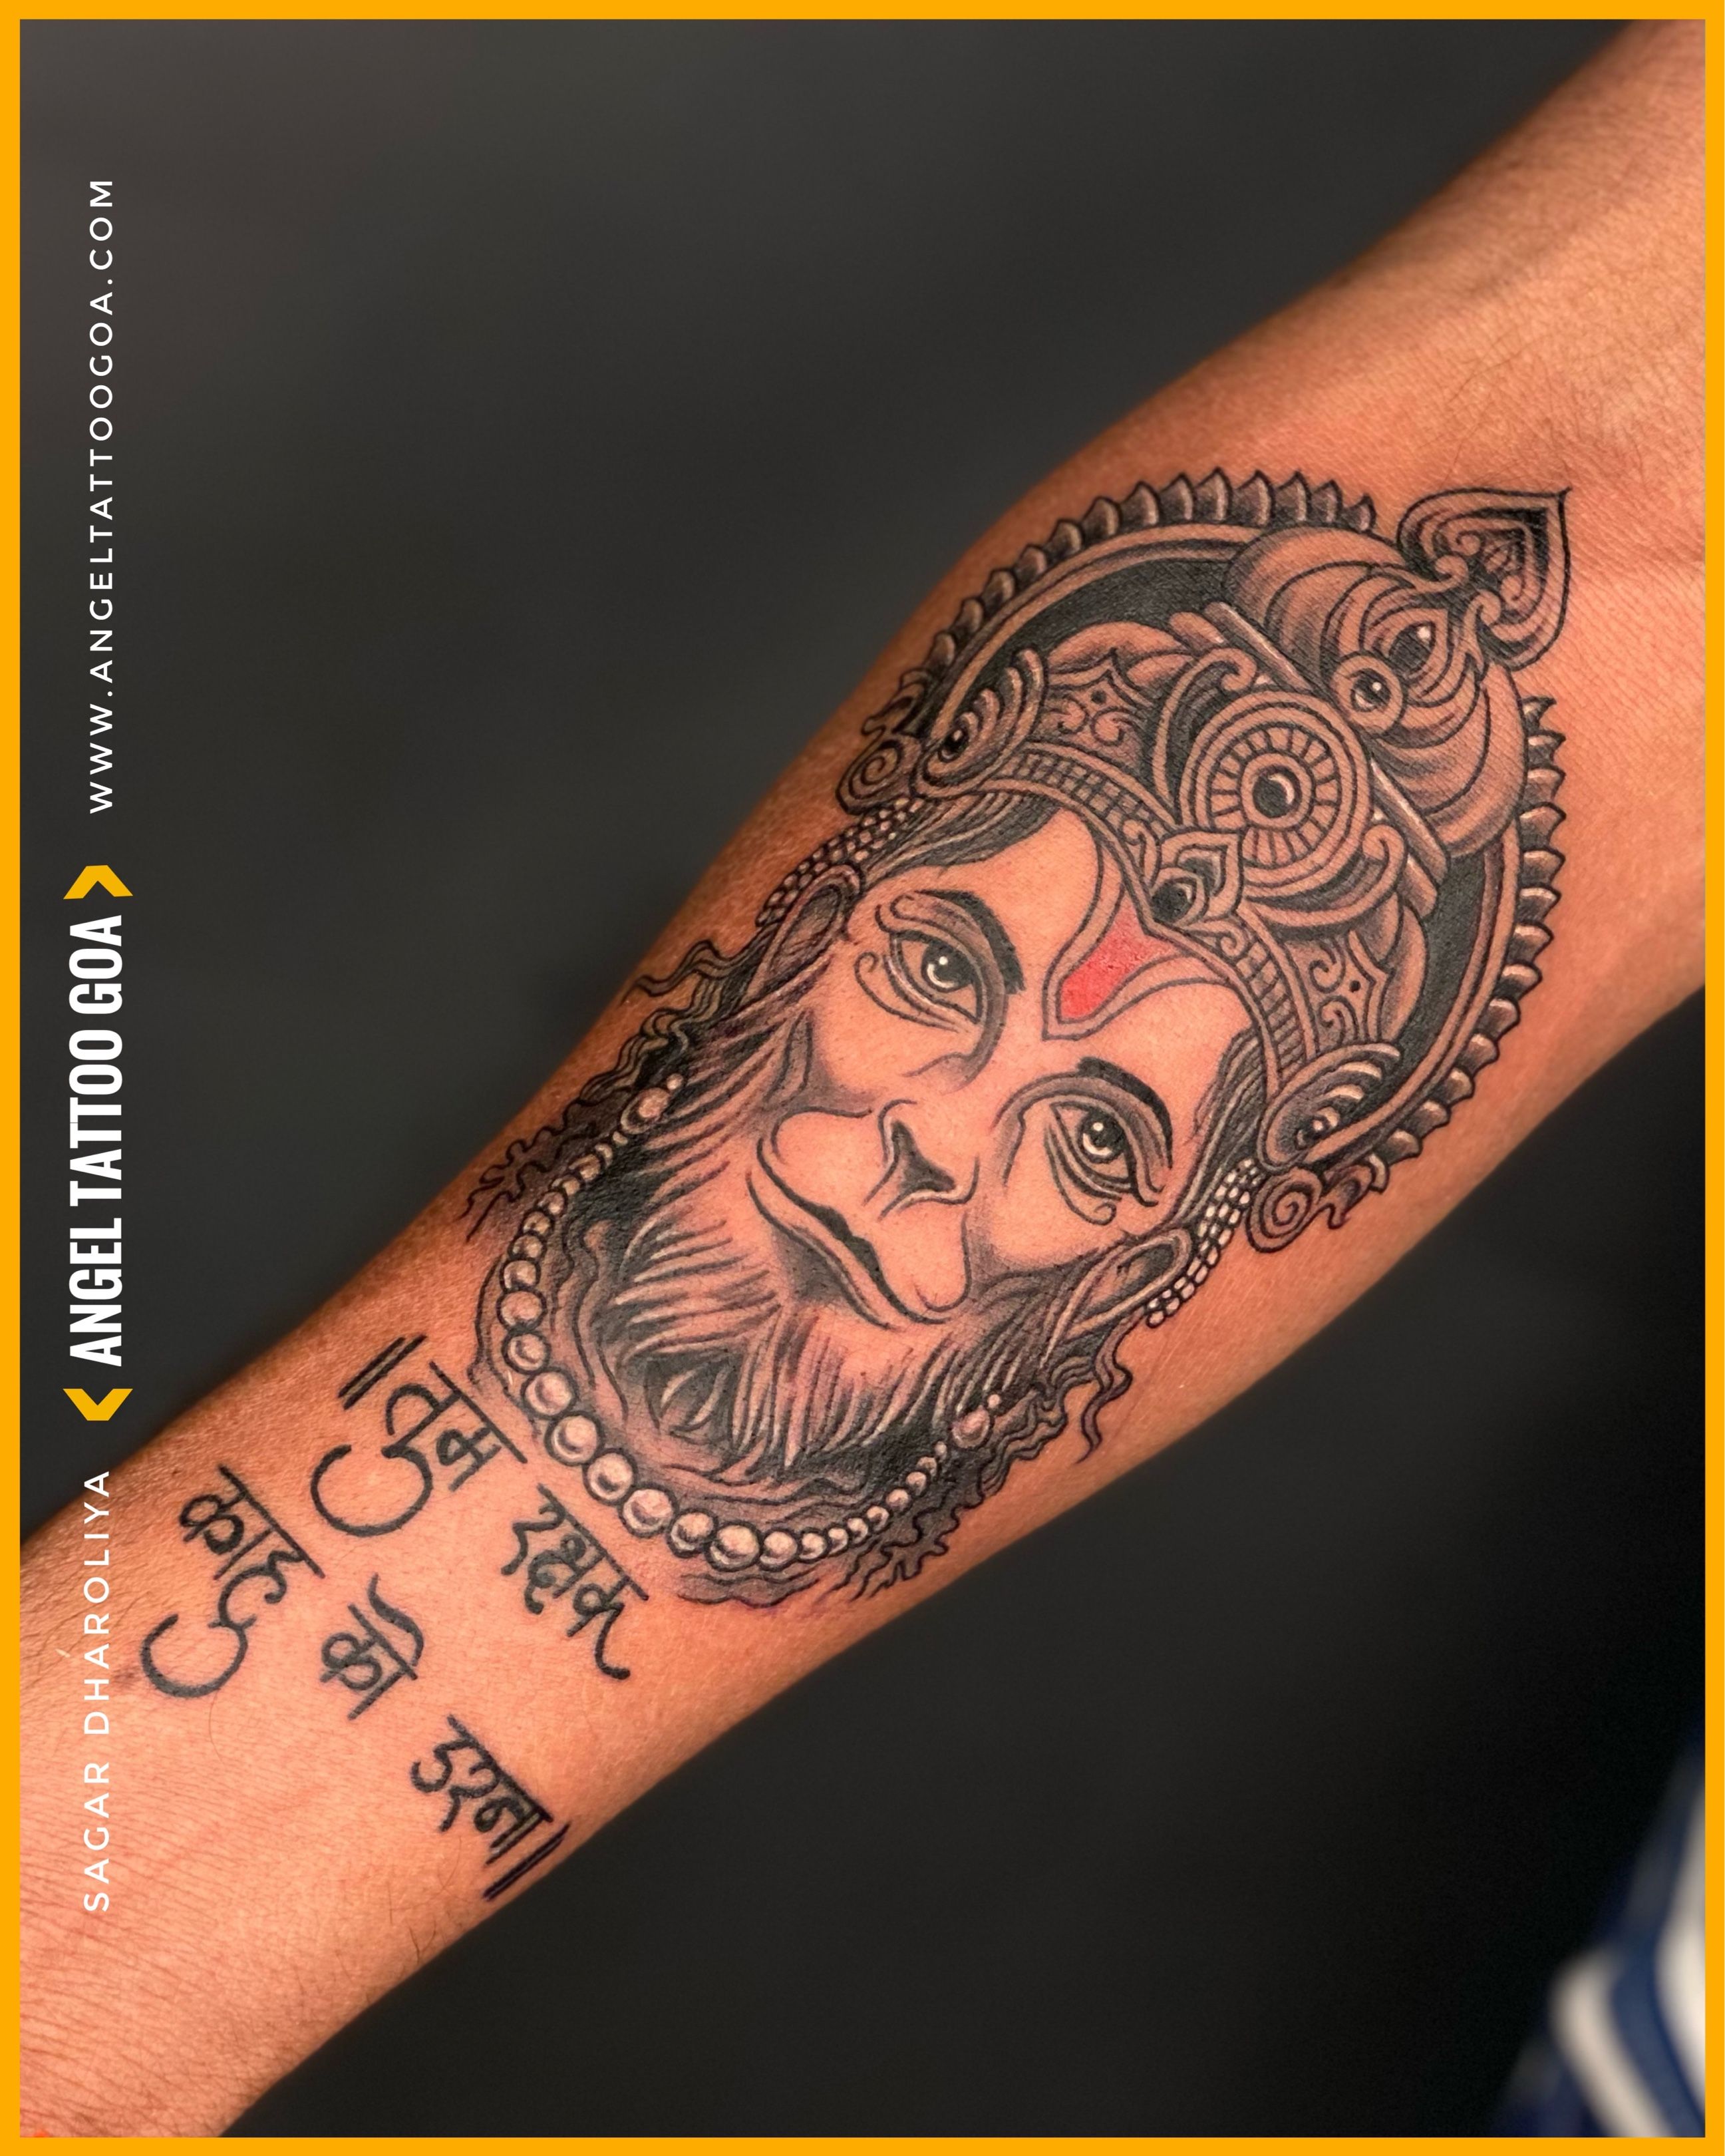 Portrait Tattoo by Mukesh Waghela The Best Tattoo Artist In Goa At Moksha Tattoo  Studio Goa India. - Best Tattoo Artist in Goa Safe, Hygienic #1 Best Tattoo  Studio In Goa India